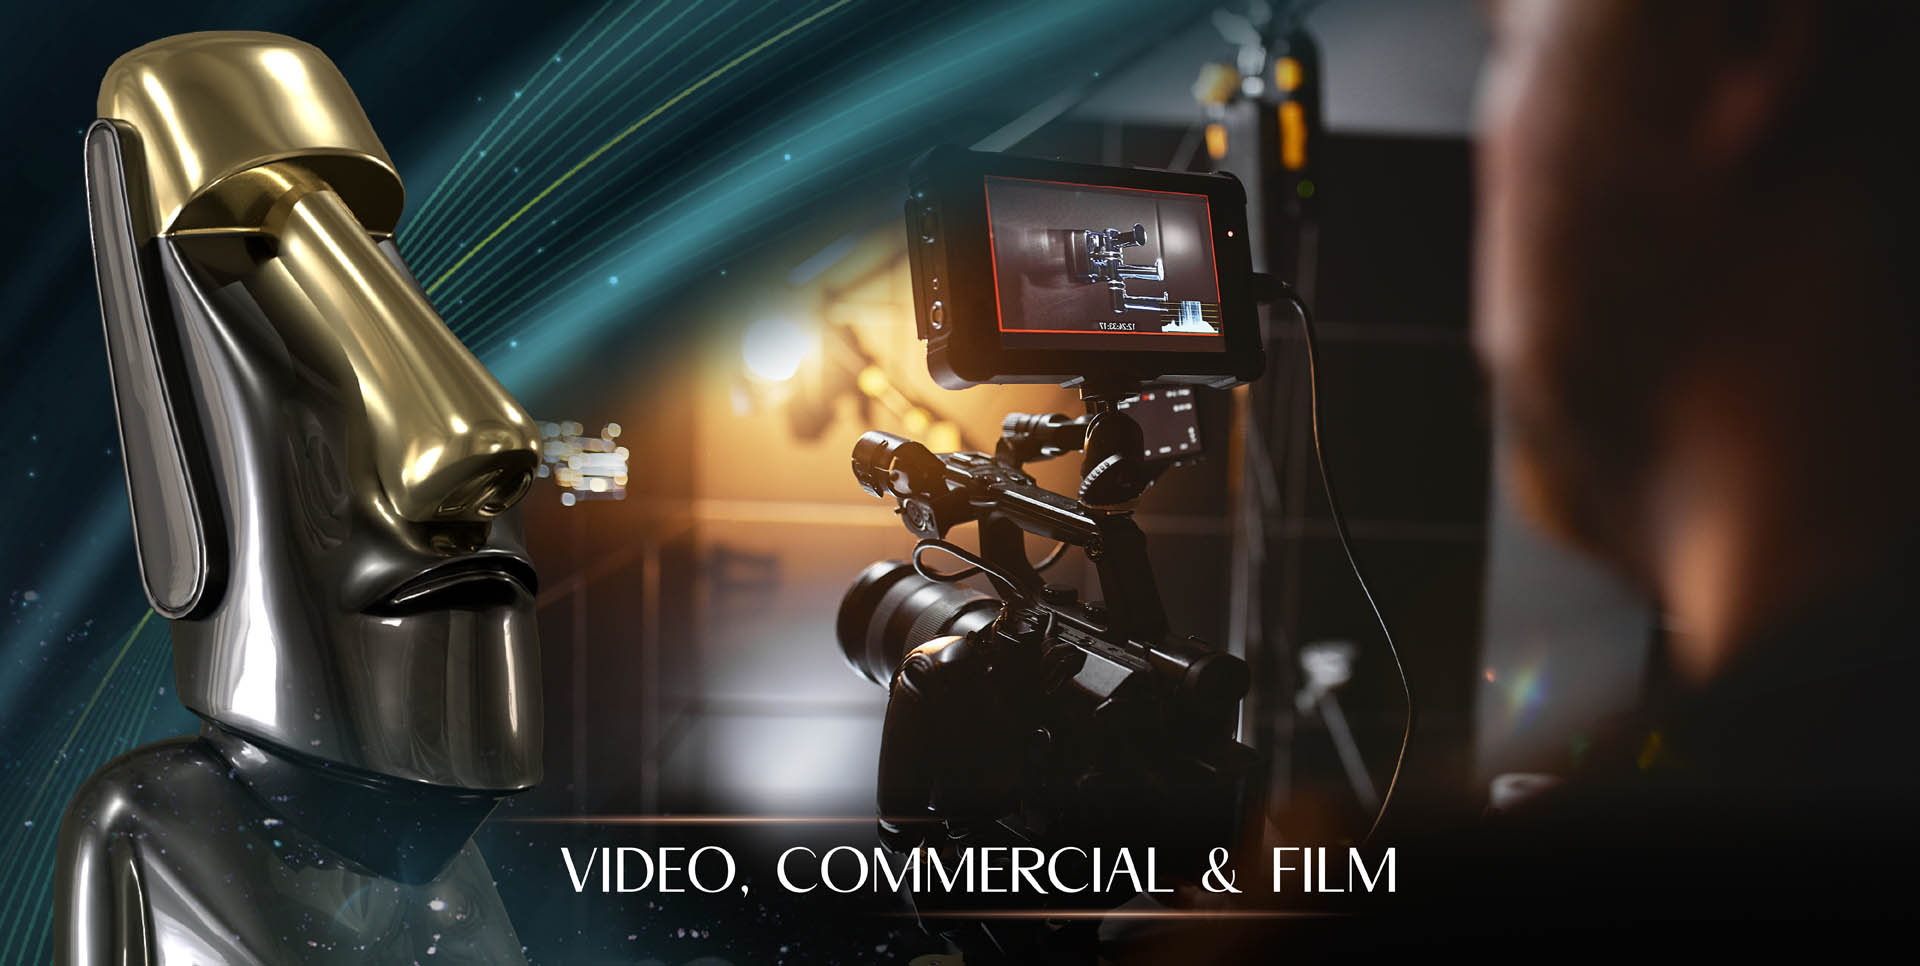 TITAN Video, Commercial & Film